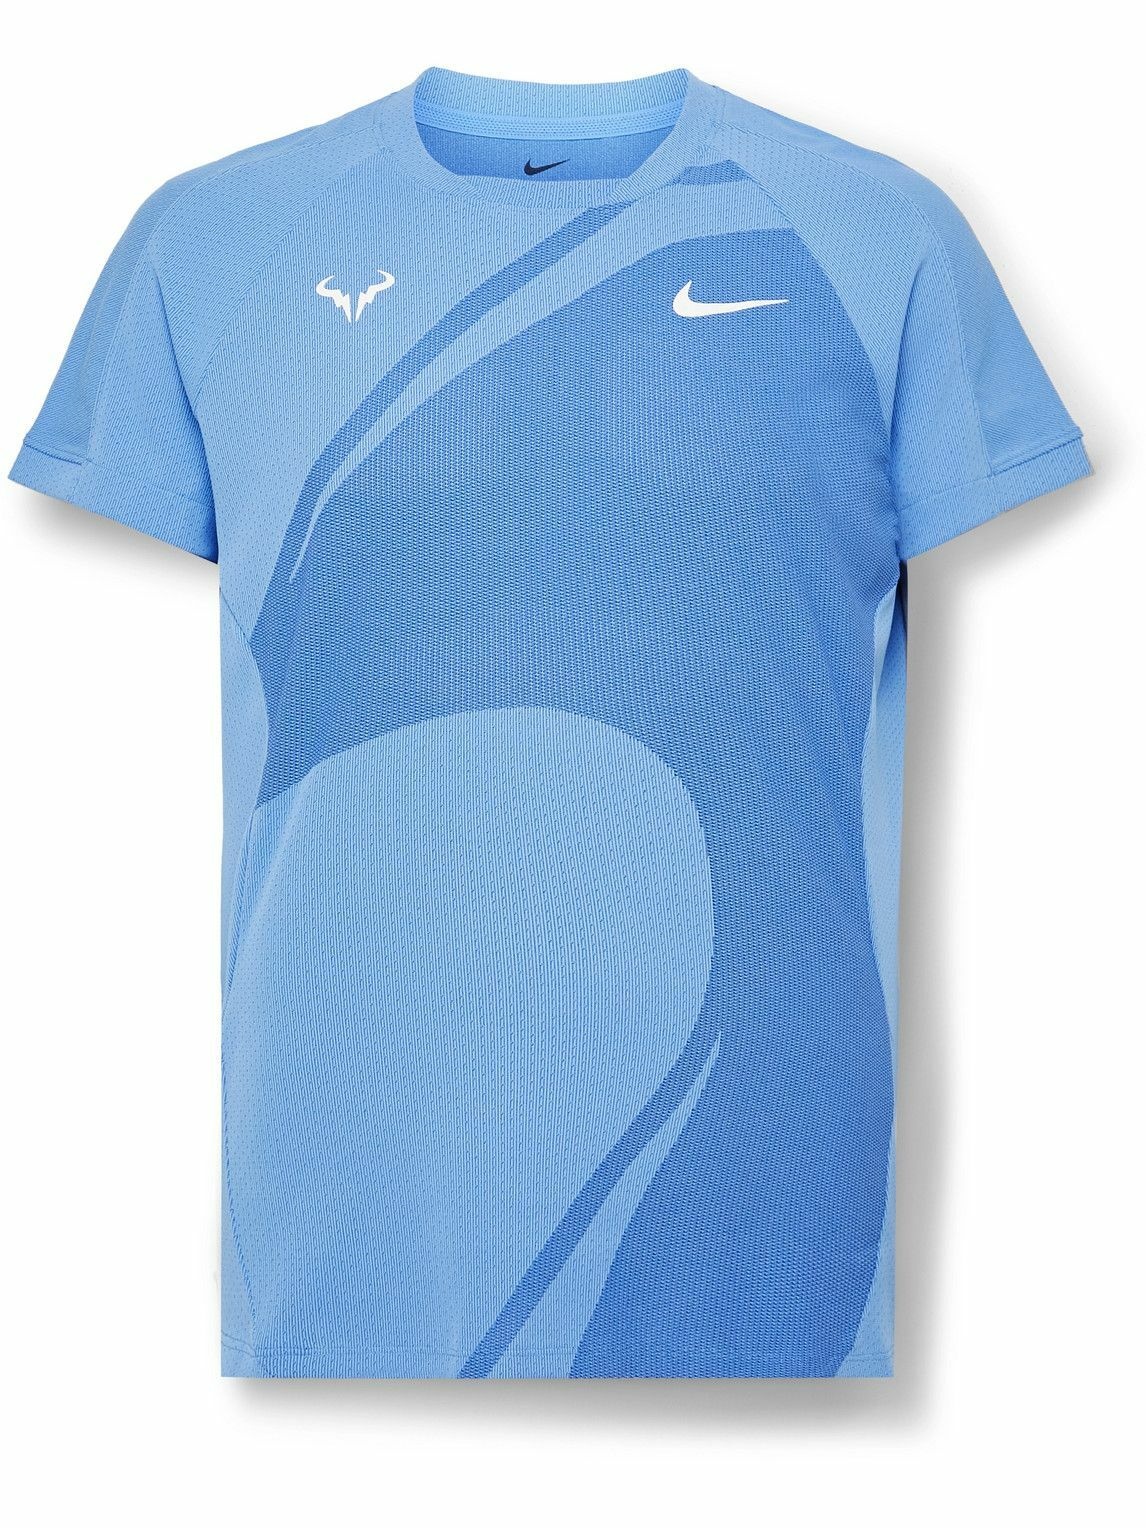 Nike Tennis - NikeCourt Rafa Slim-Fit Dri-FIT ADV T-Shirt - White Nike ...